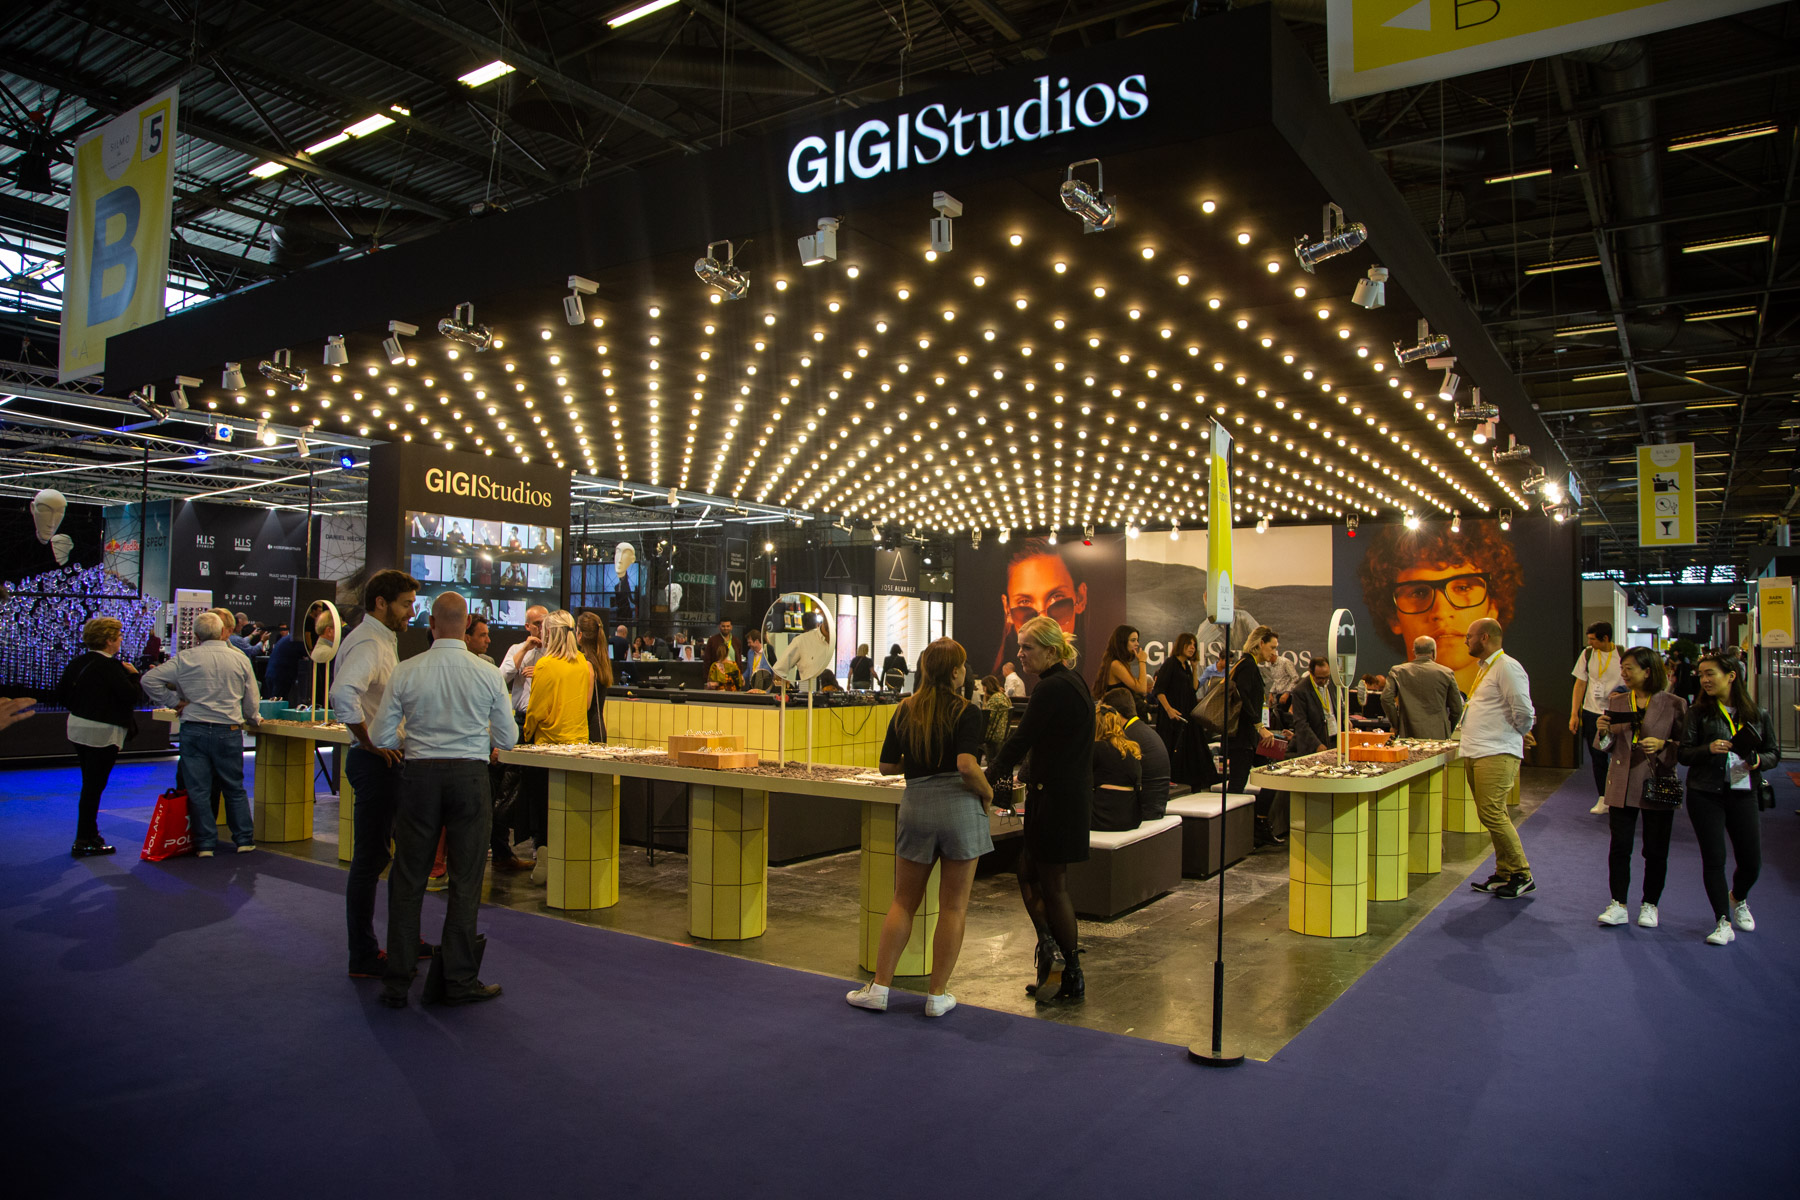 Gigi Studios